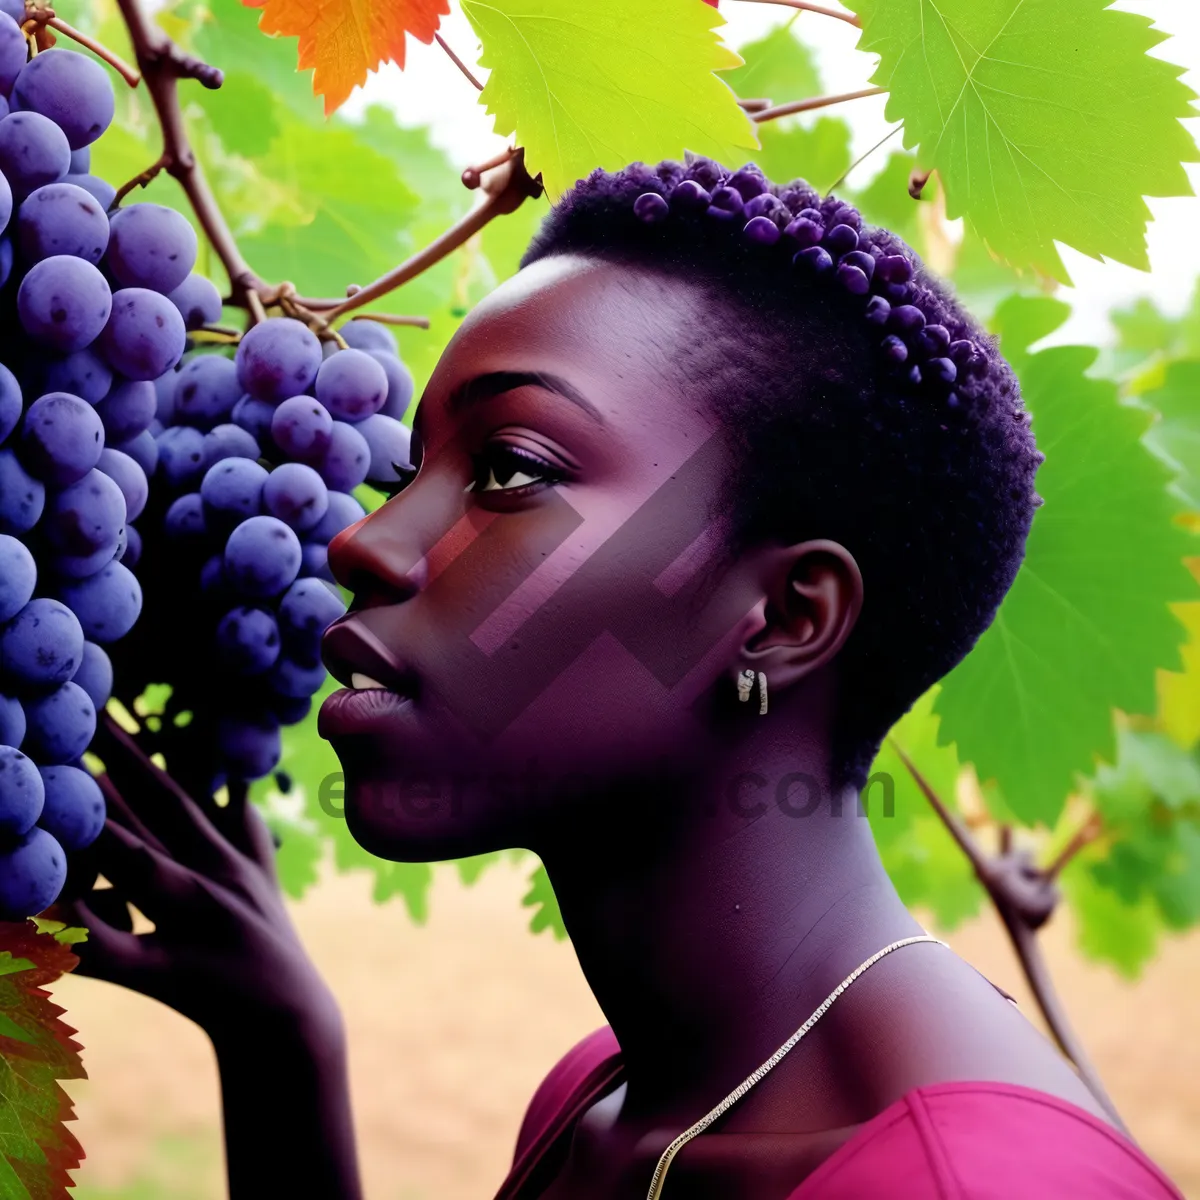 Picture of Vibrant Harvest: Purple grapes on vine.